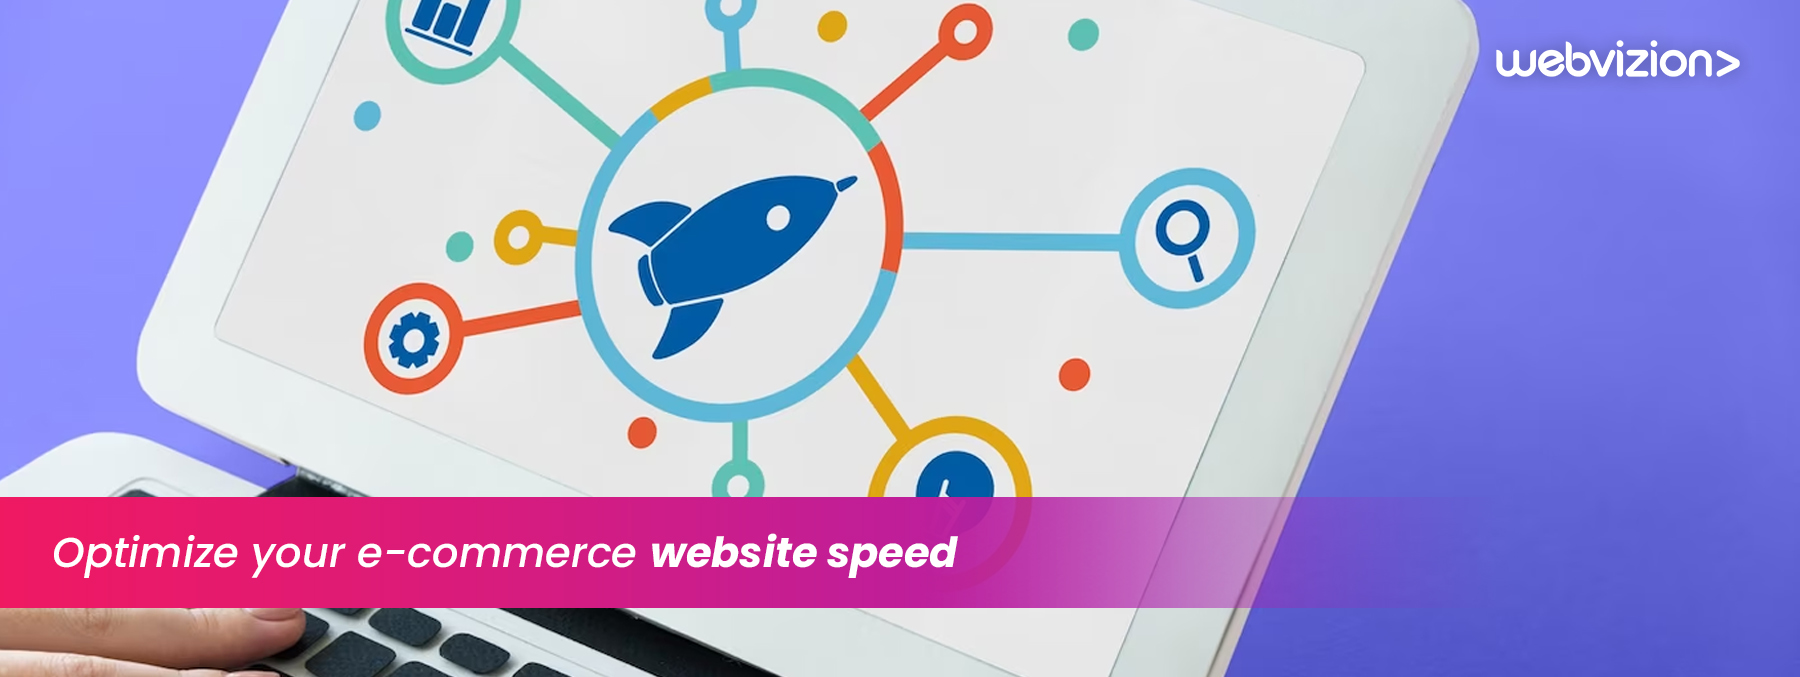 Optimize-your-e-commerce-website-speed-Webvizion-Global